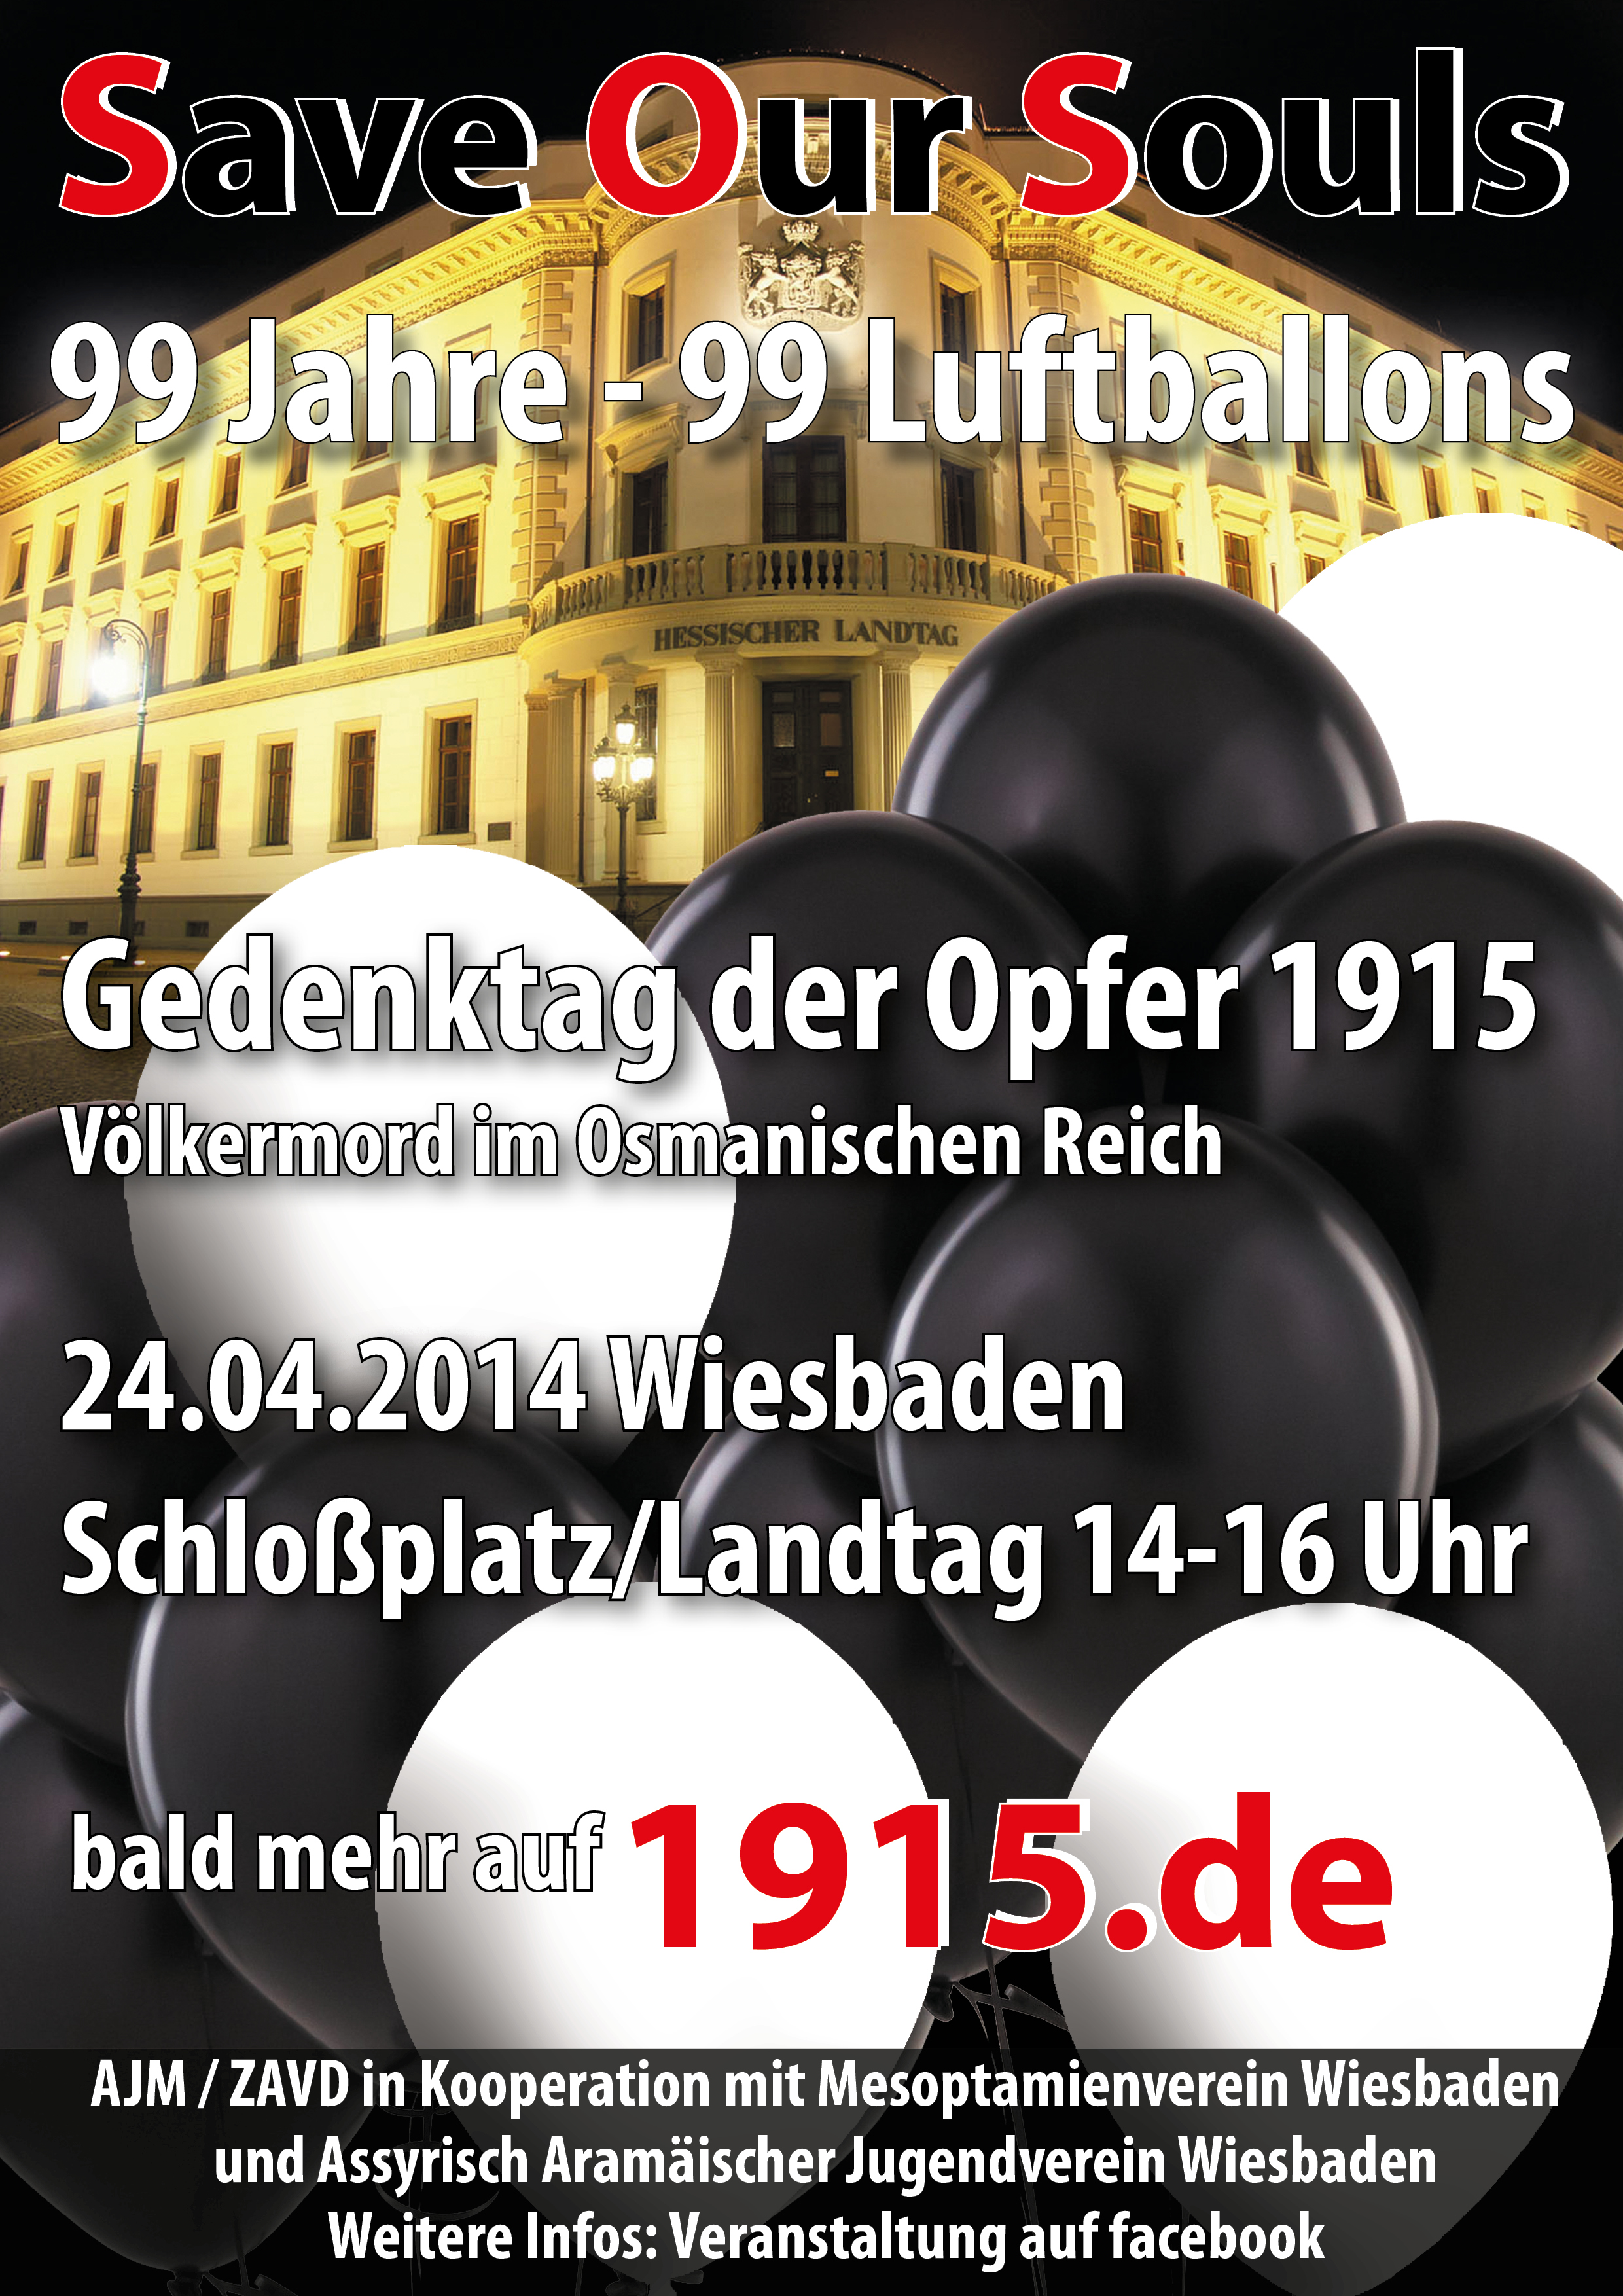  Save Our Souls 99. Jahrestag – 99. Luftballons